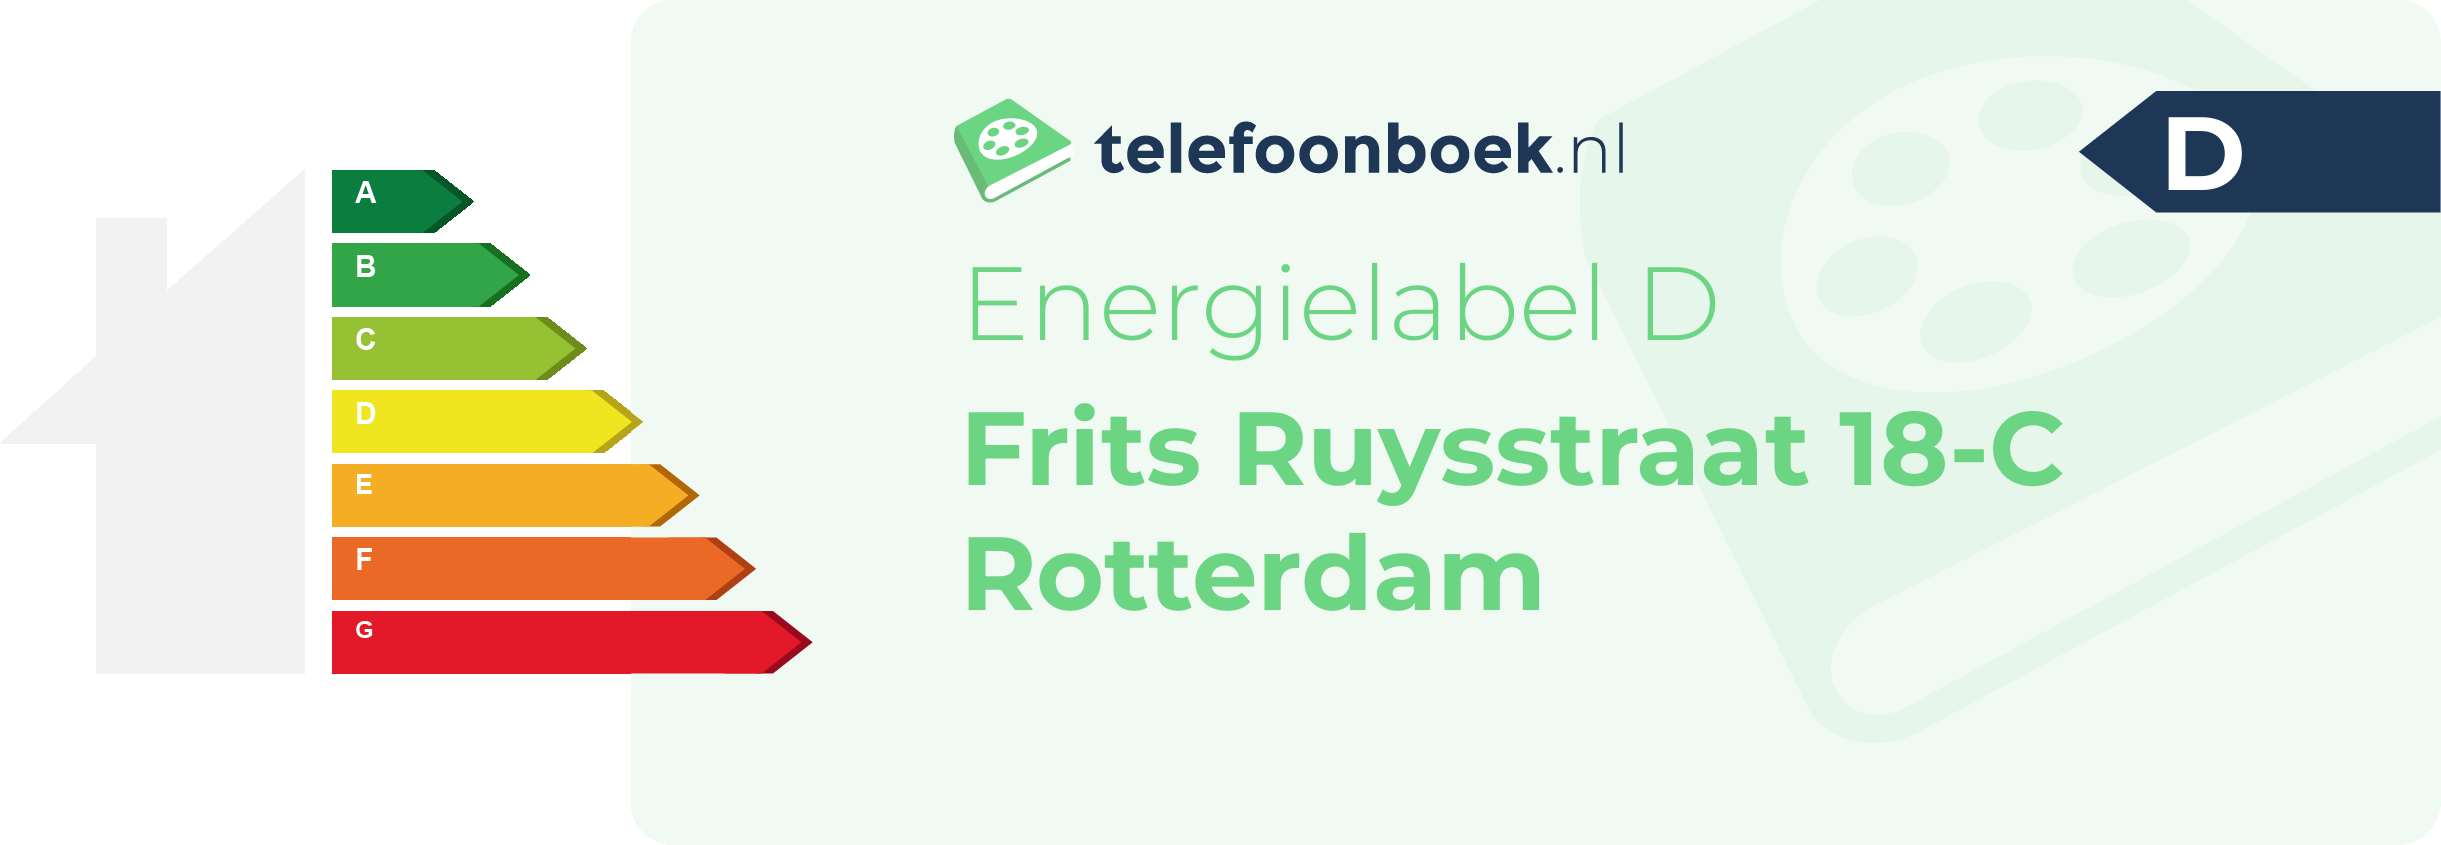 Energielabel Frits Ruysstraat 18-C Rotterdam